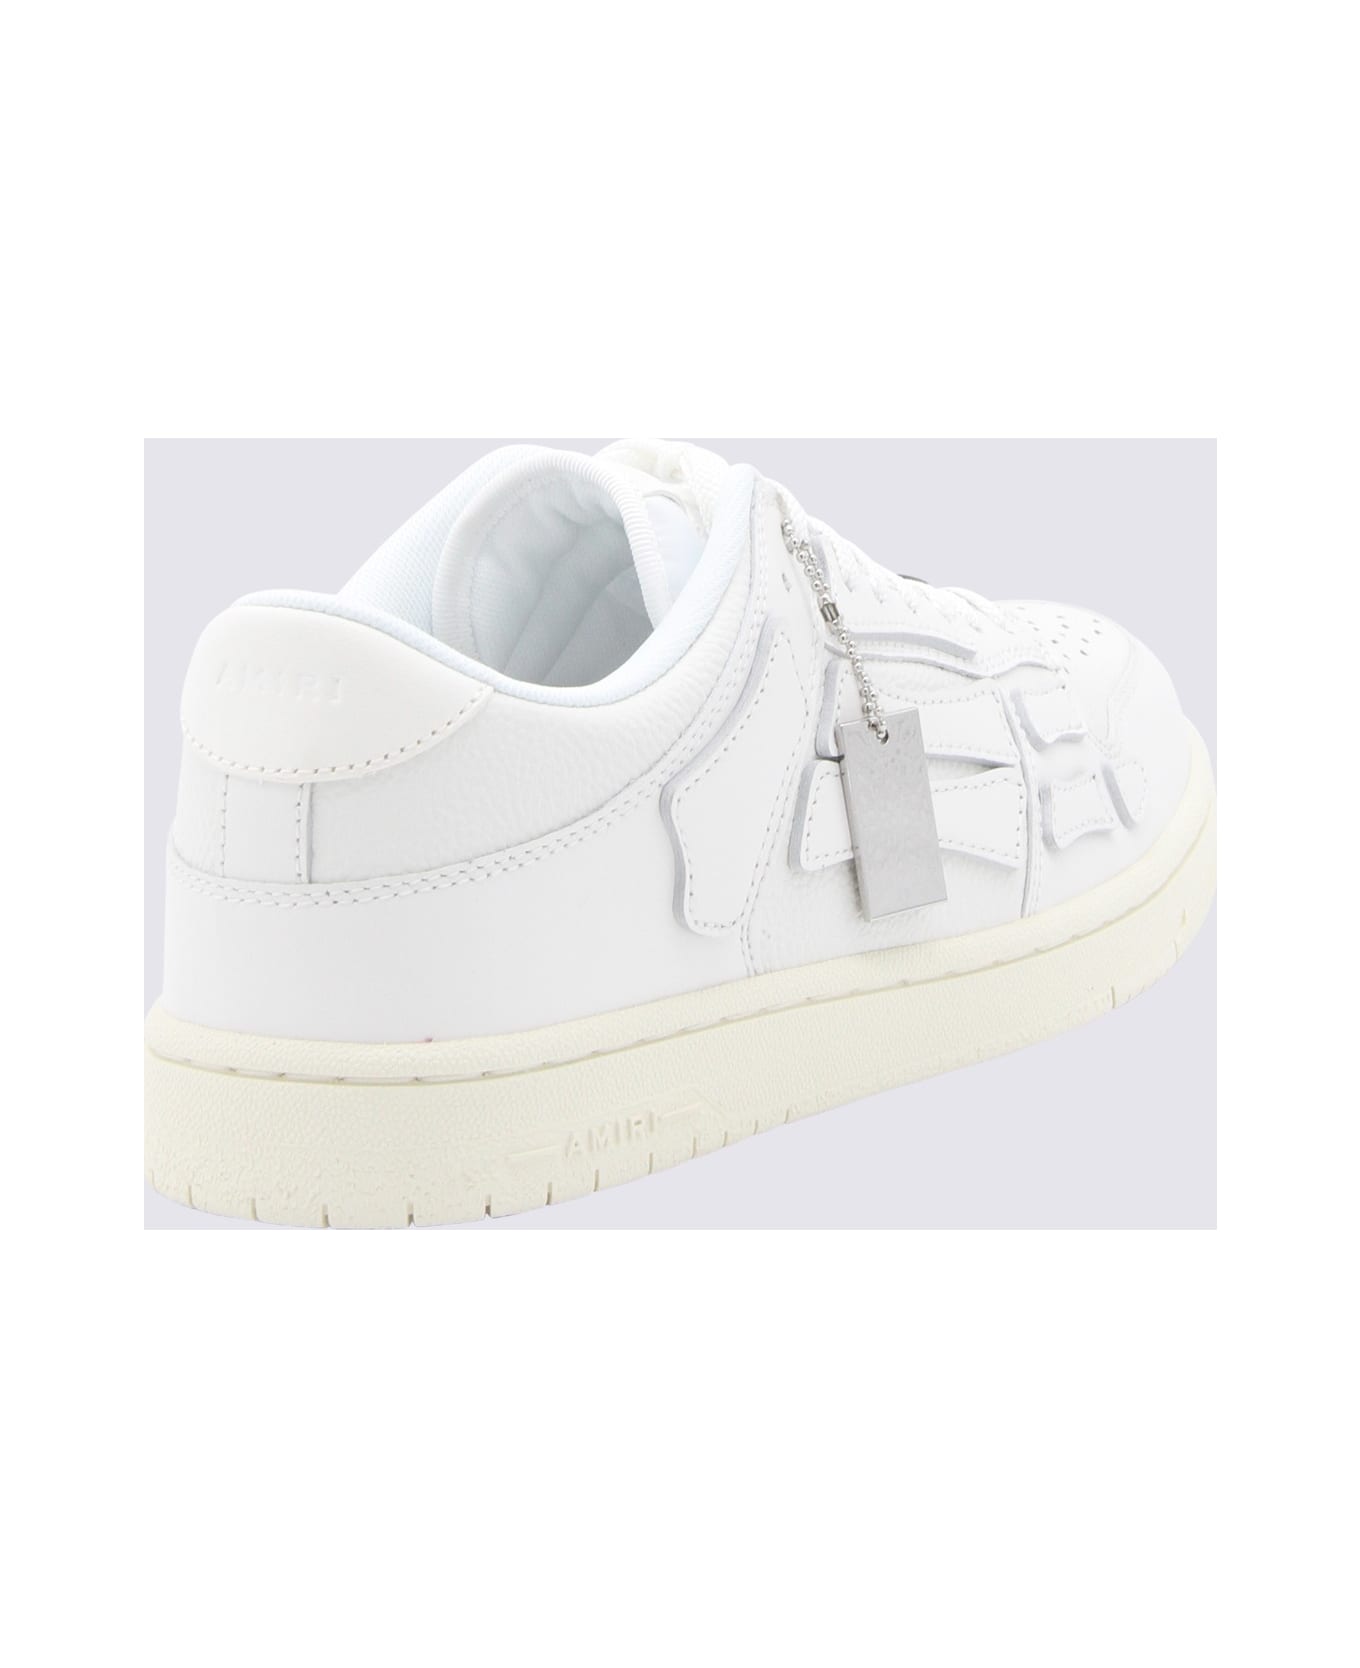 AMIRI White Leather Skel Sneakers